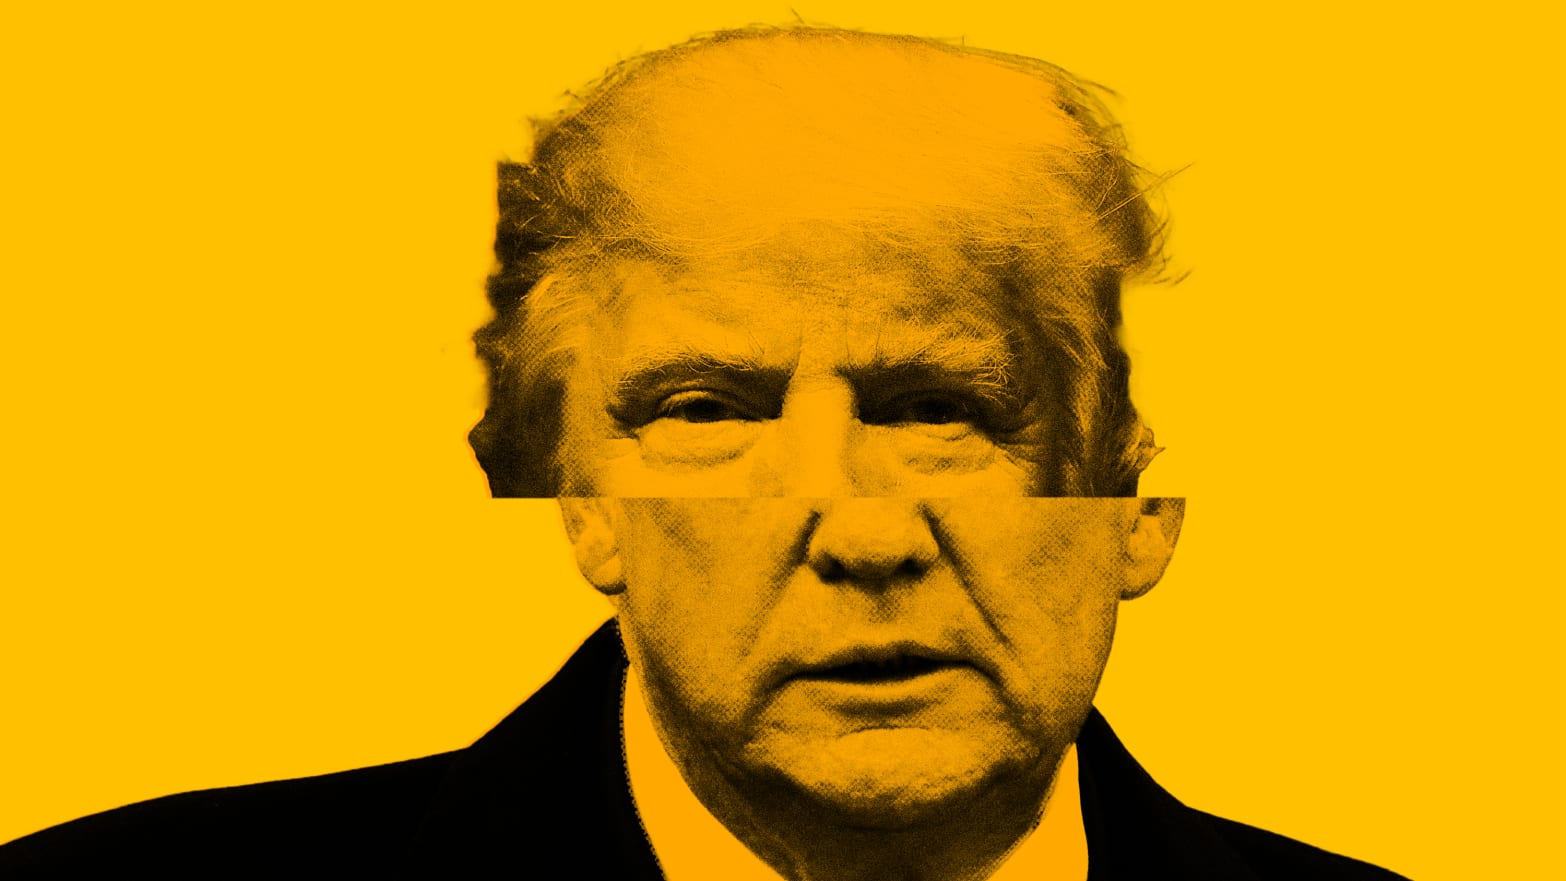 Photo illustration of Donald Trump with his head split in half horizontally